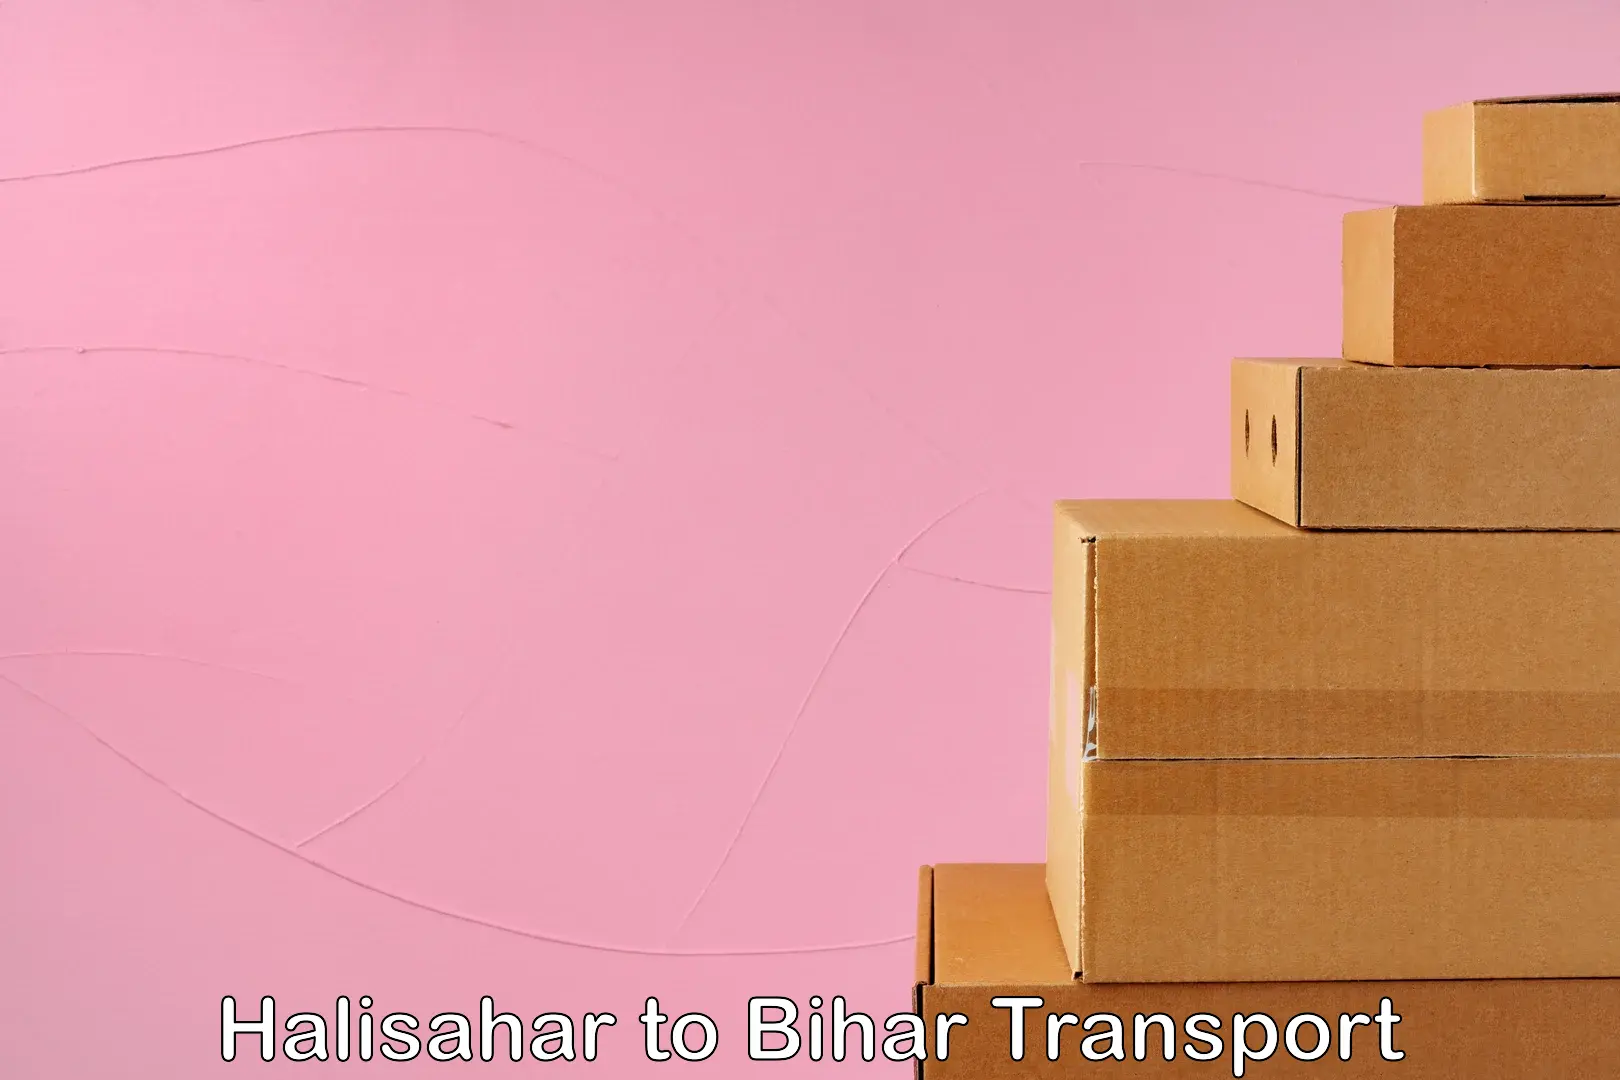 Sending bike to another city Halisahar to Bihar